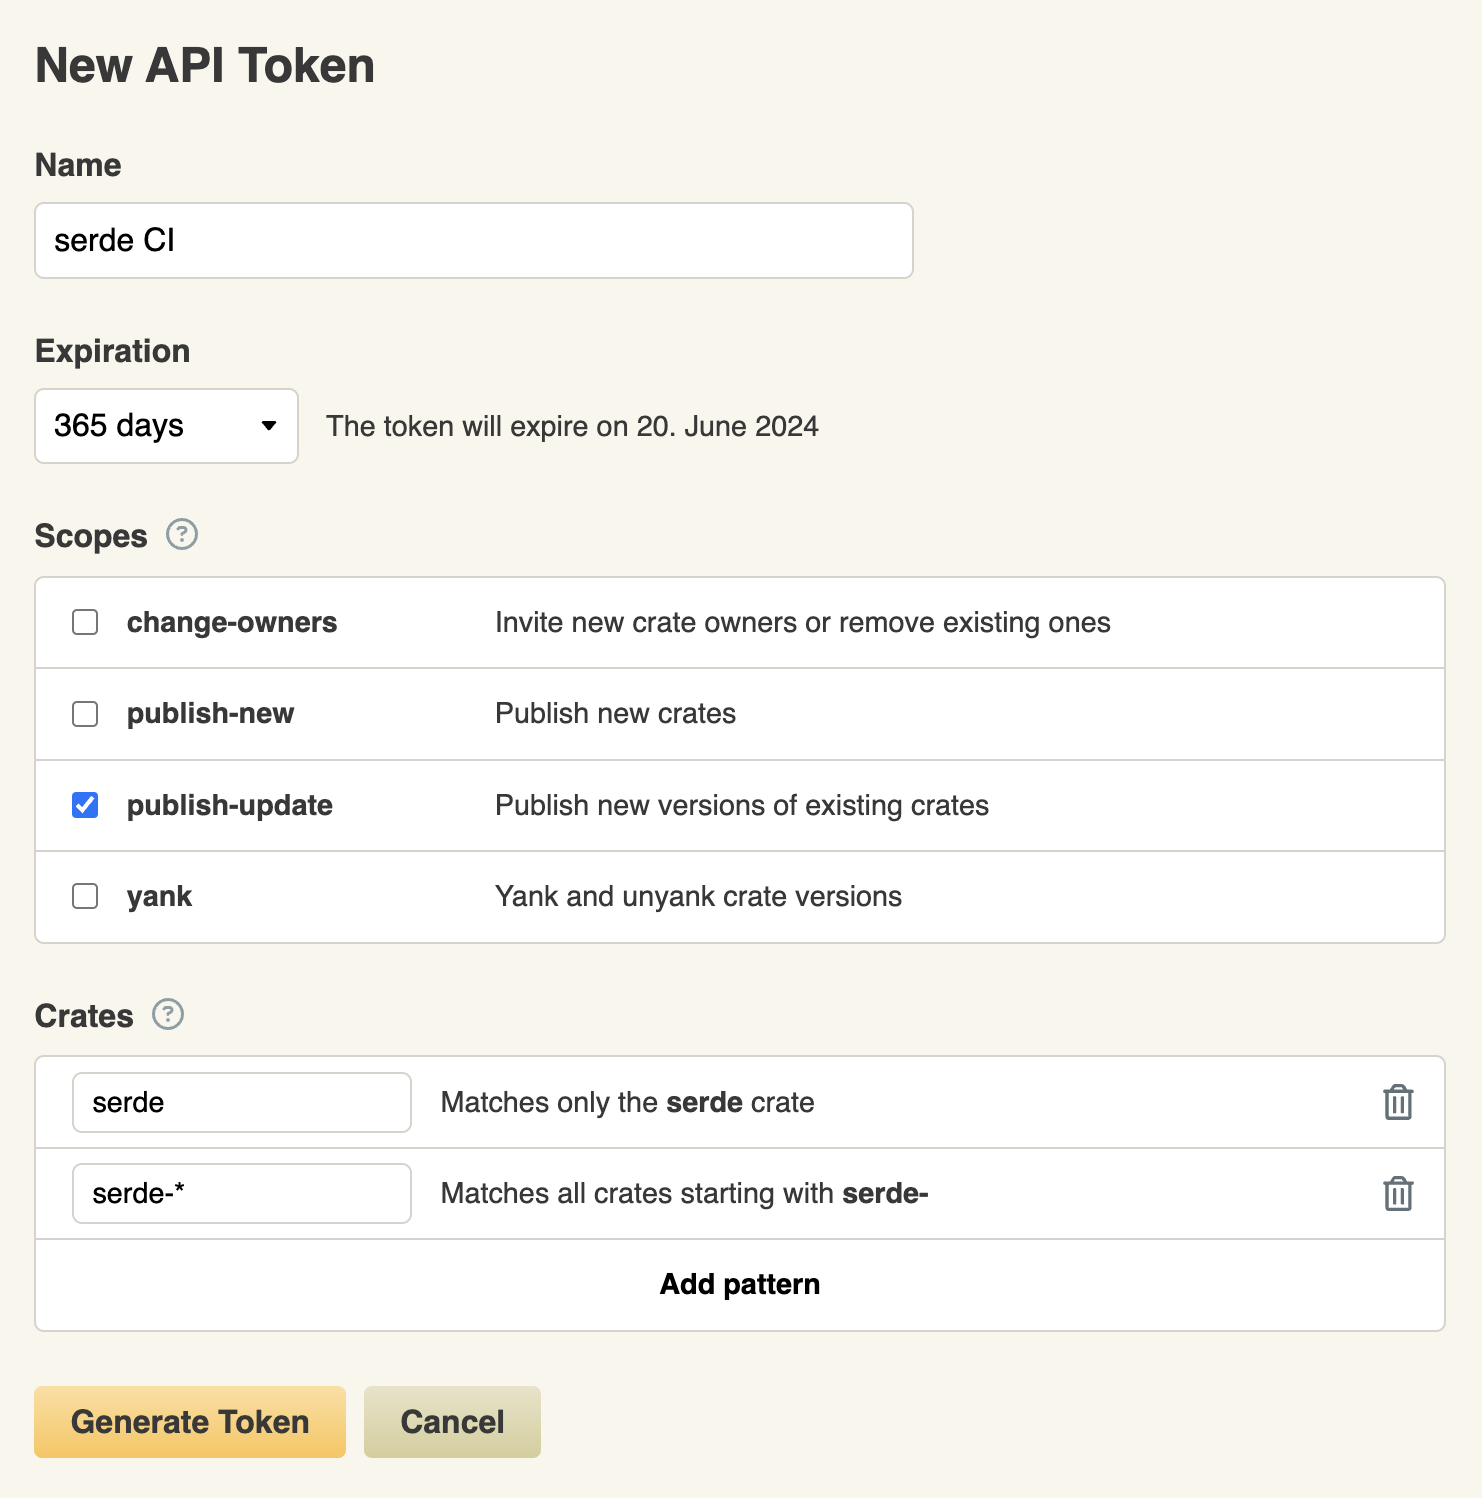 Screenshot of the "New API Token" page